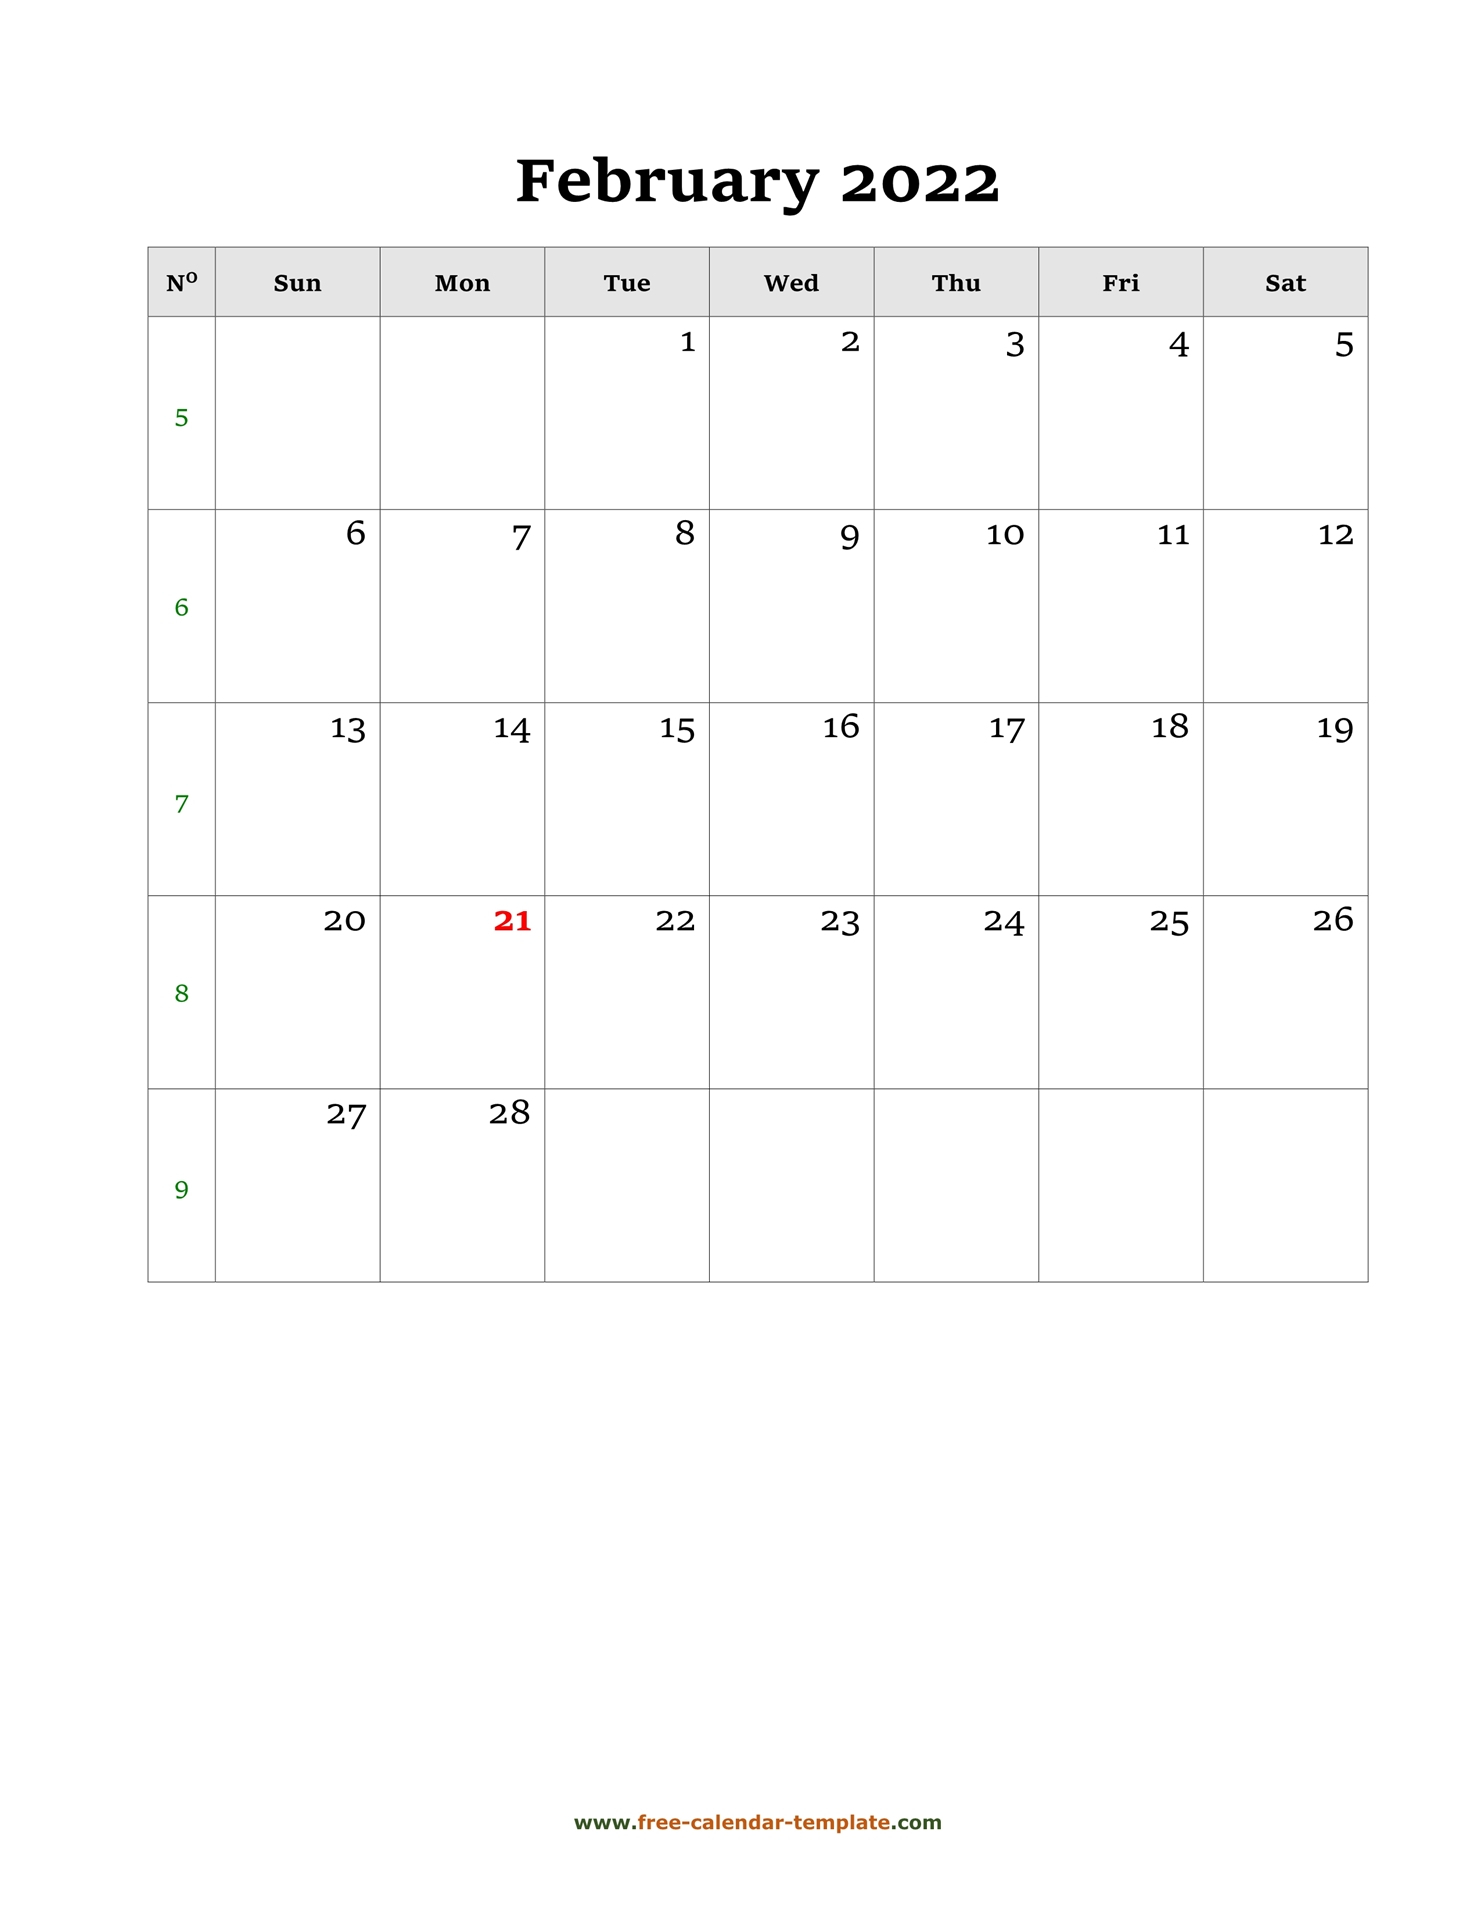 Collect February 2022 Hijri Calendar